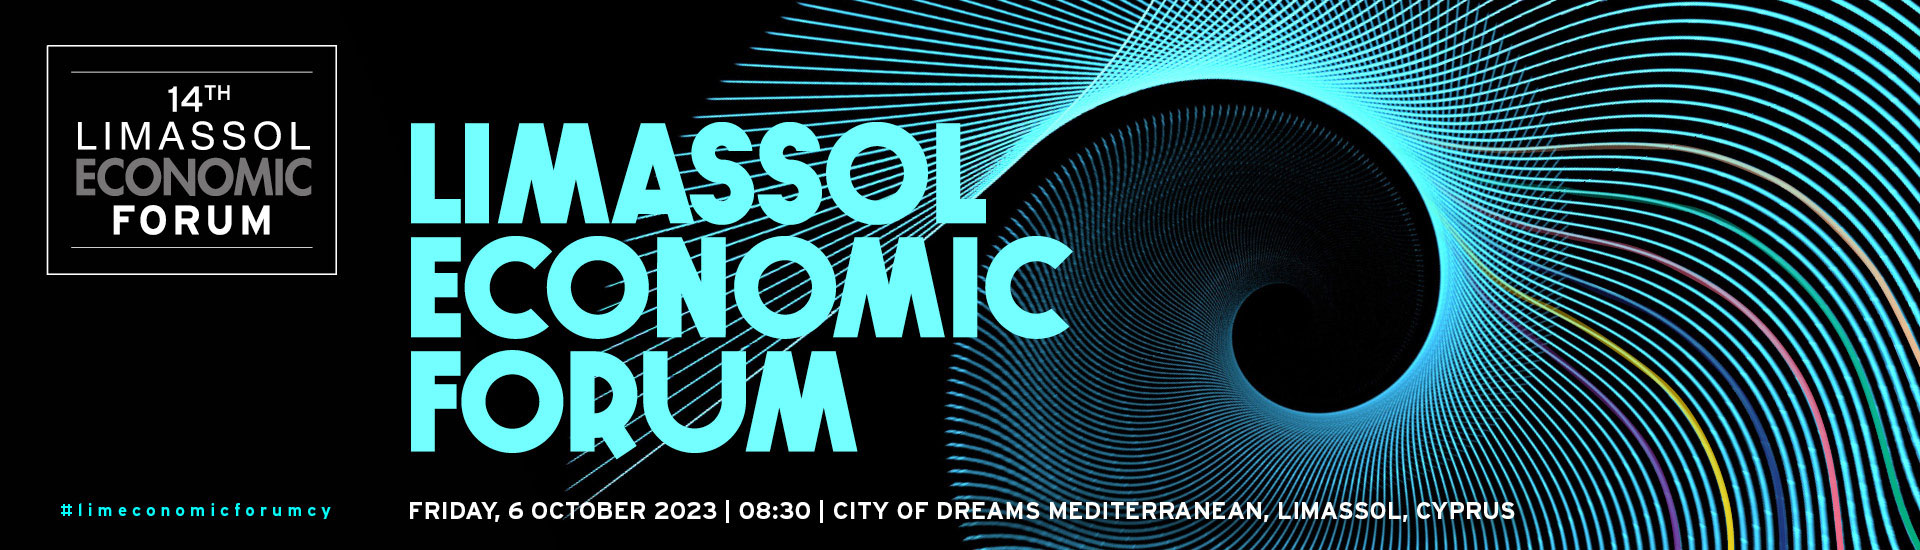 14th Limassol Economic Forum